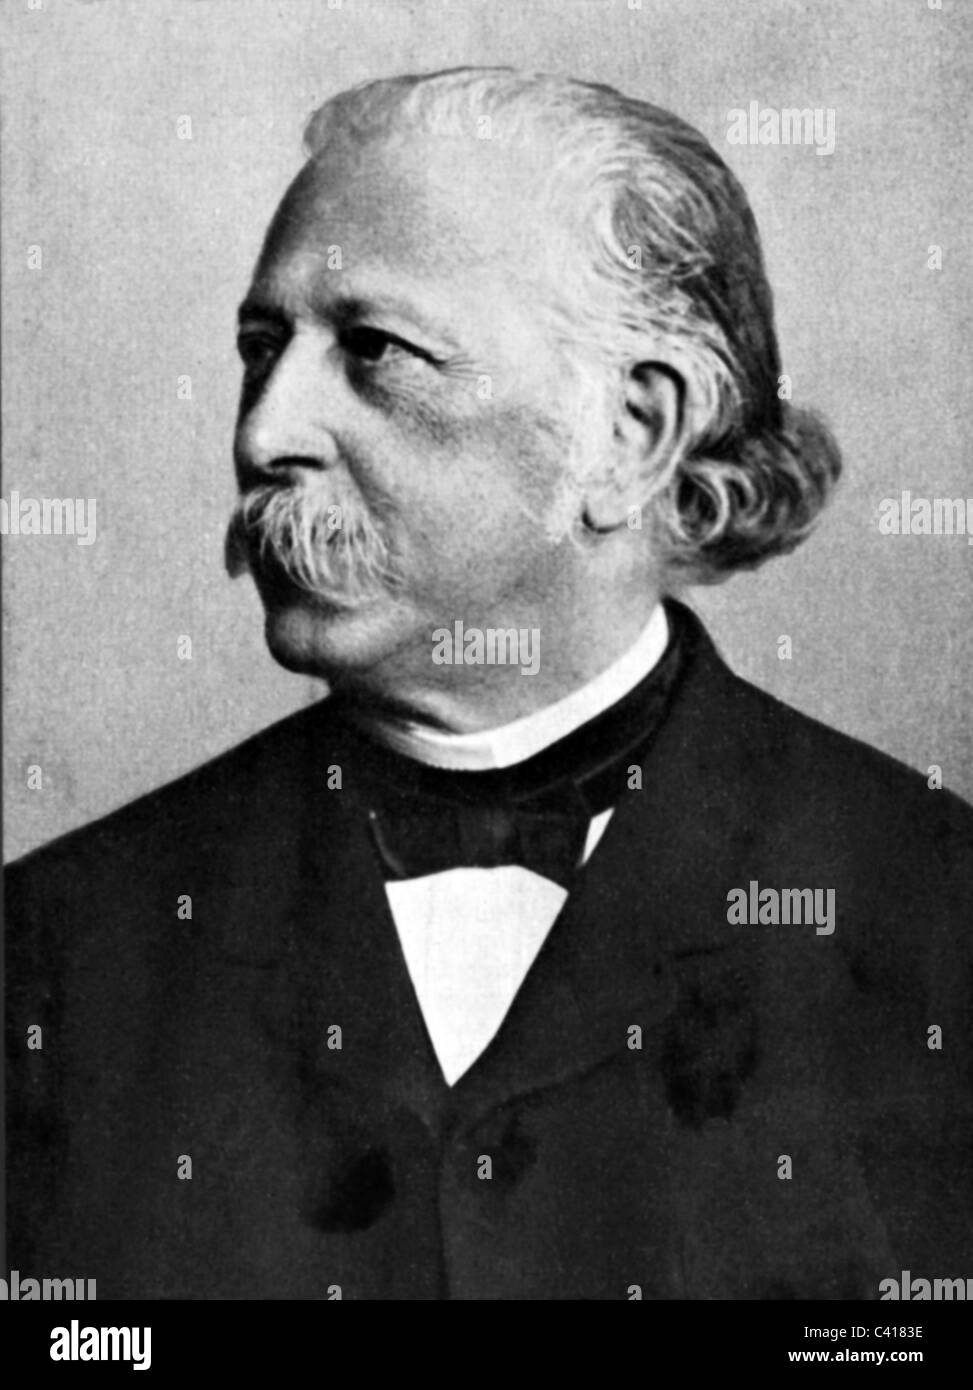 Fontane, Theodor, 30.12.1819 - 20.9.1898, German author / writer (poet), portrait, 1890, Stock Photo